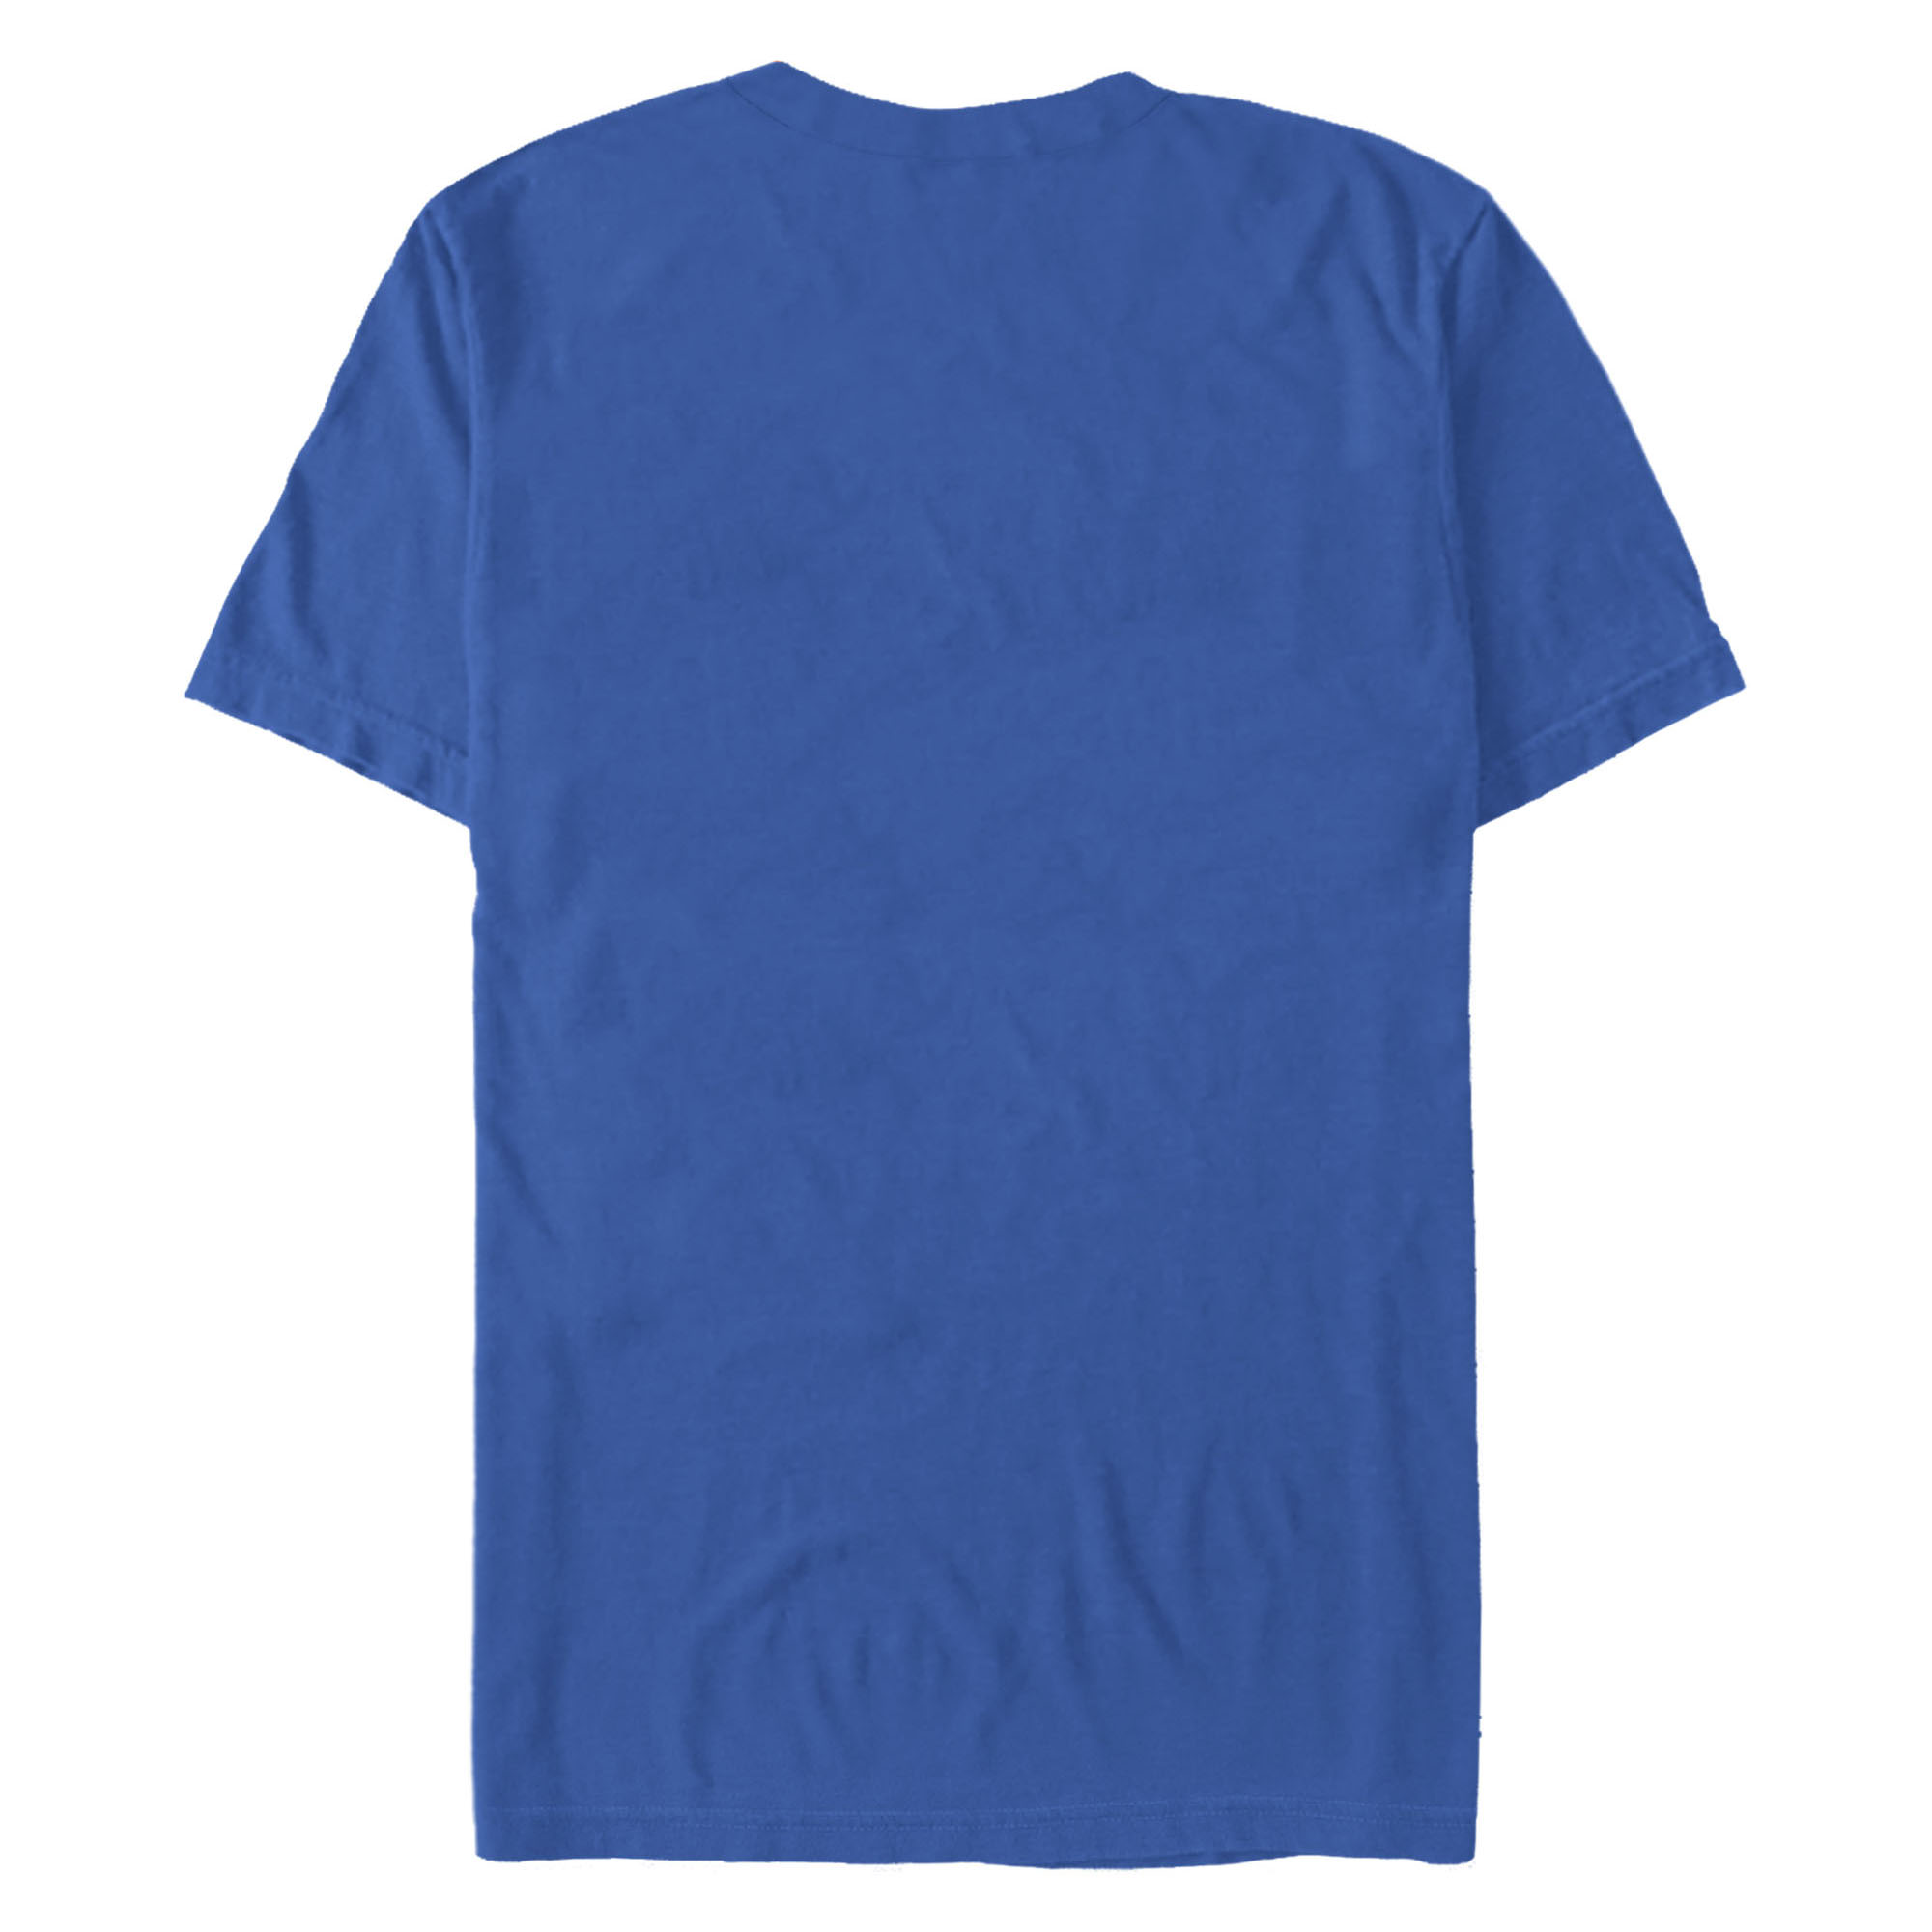 WWE Men's WWE John Cena Never Give Up Blue Logo  Graphic T-Shirt